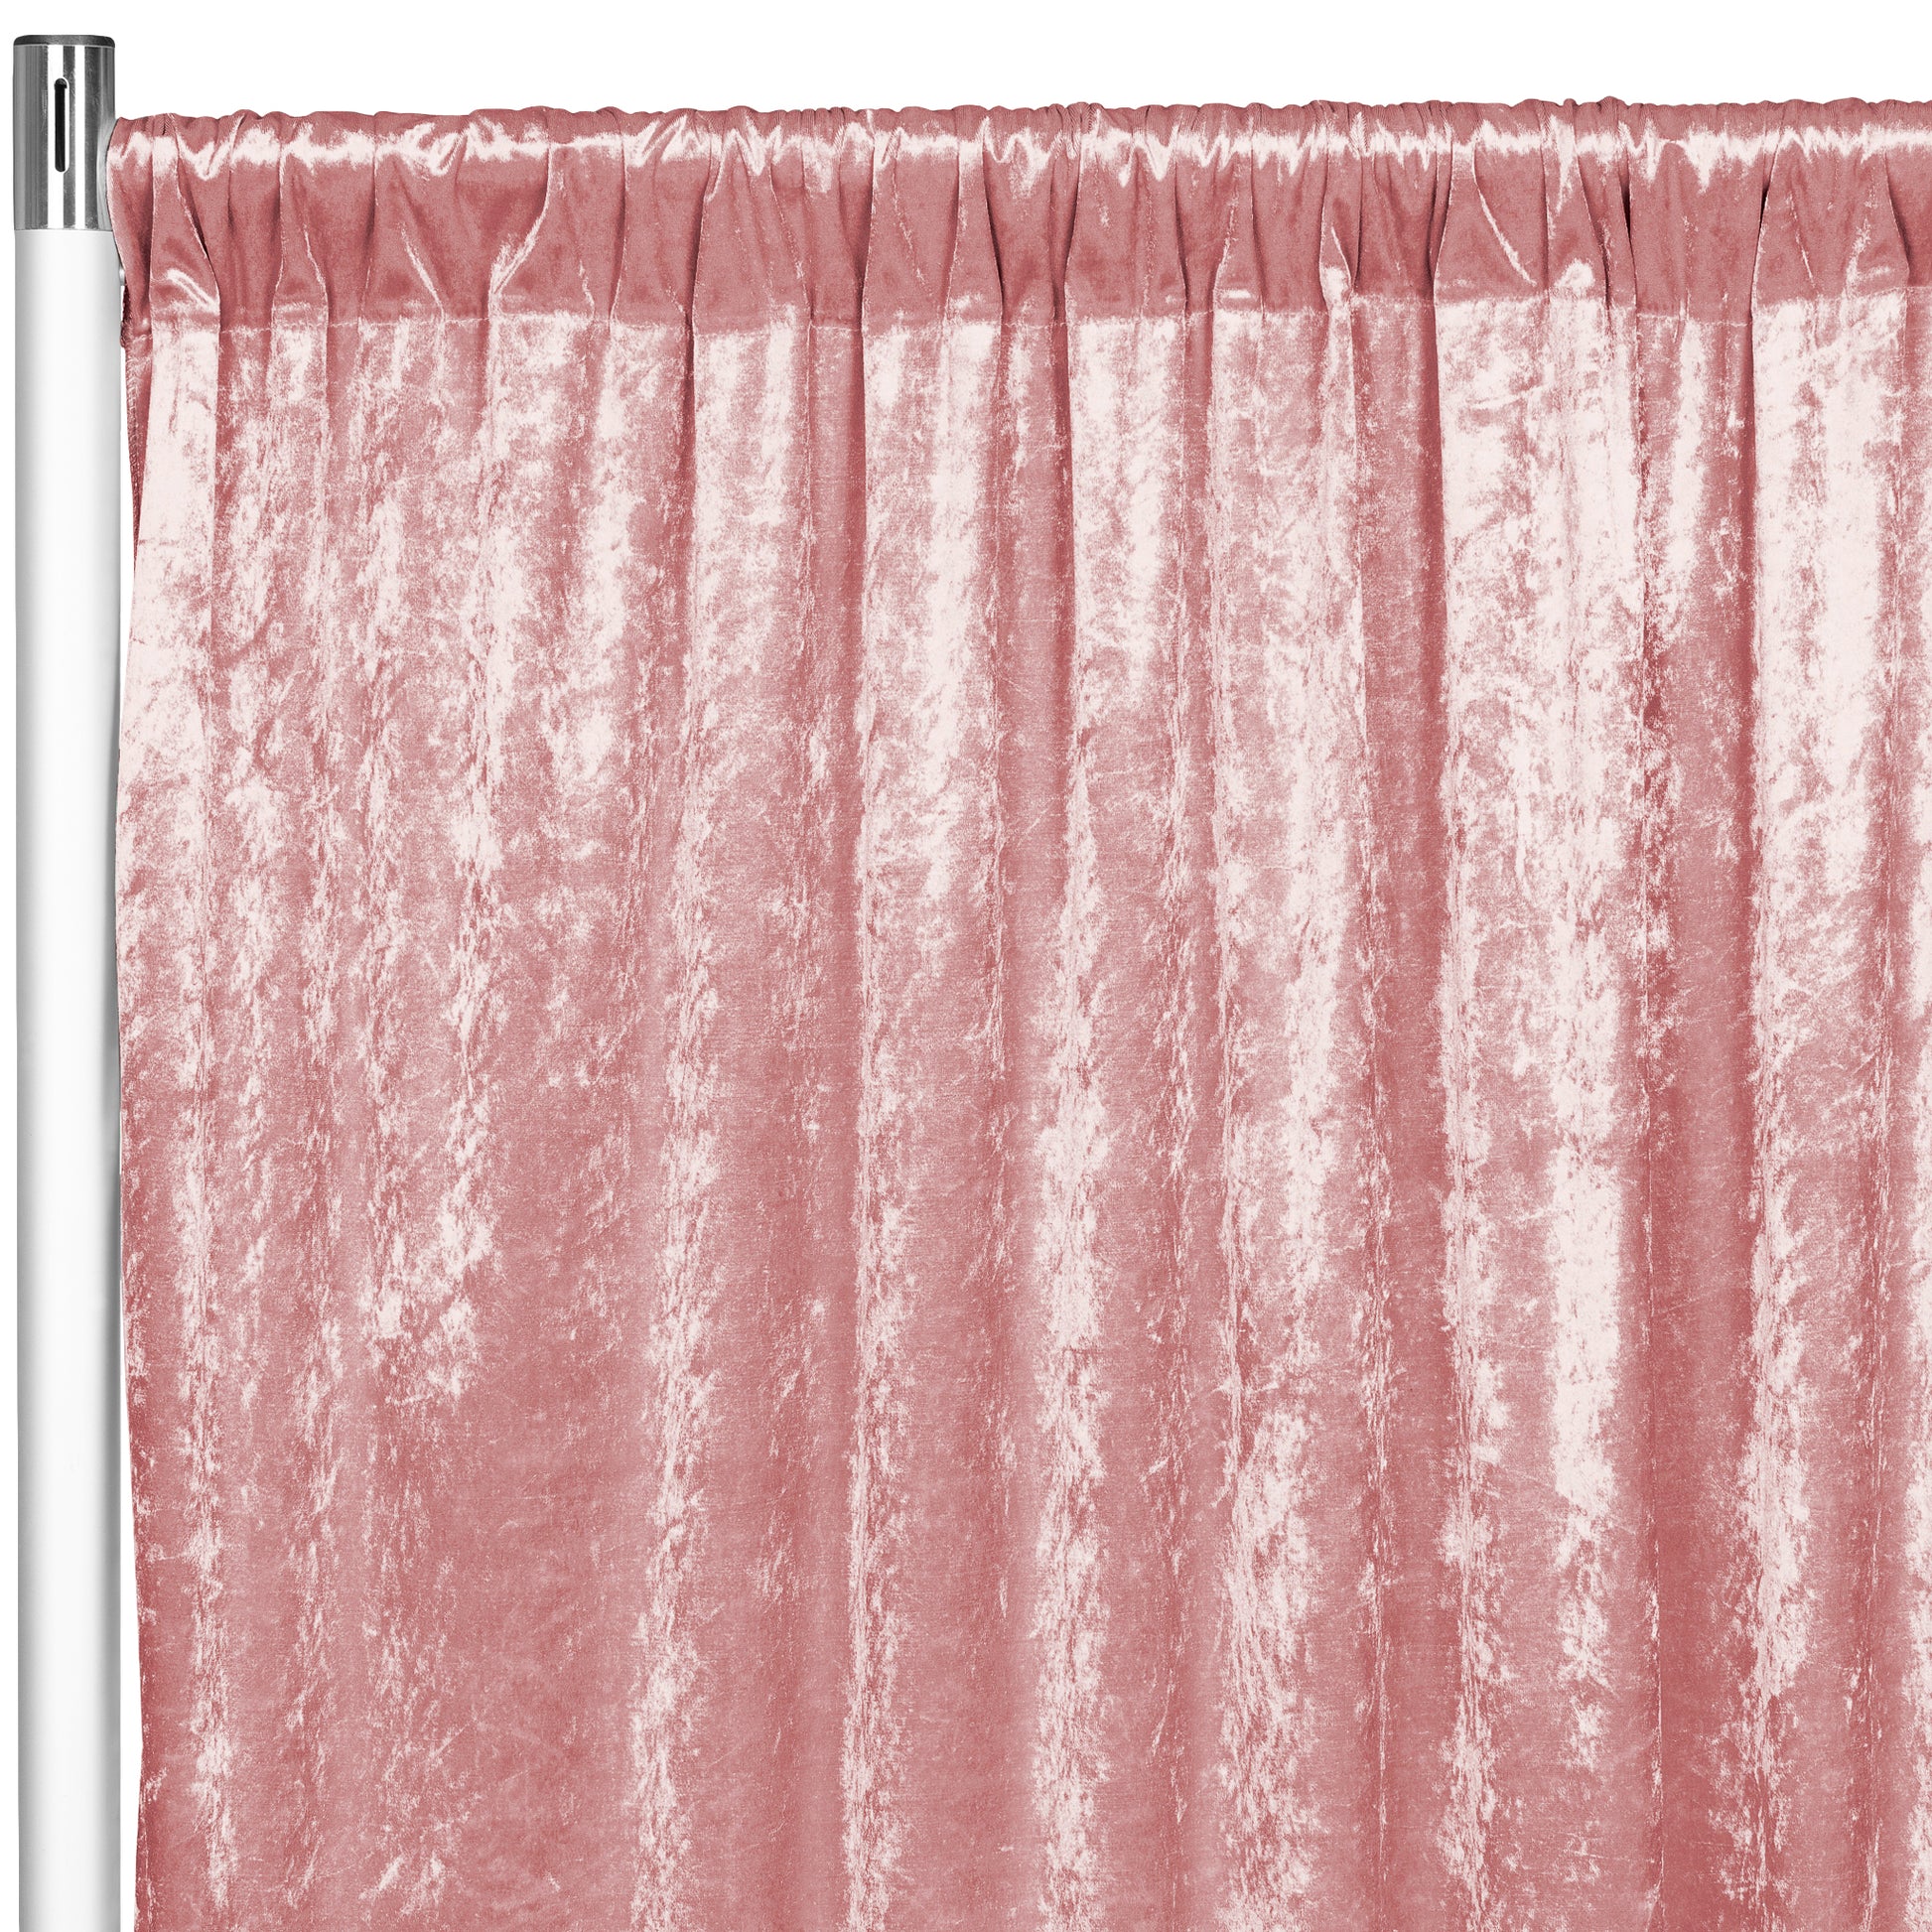 Velvet 12ft H x 52" W Drape/Backdrop Curtain Panel - Dusty Rose/Mauve